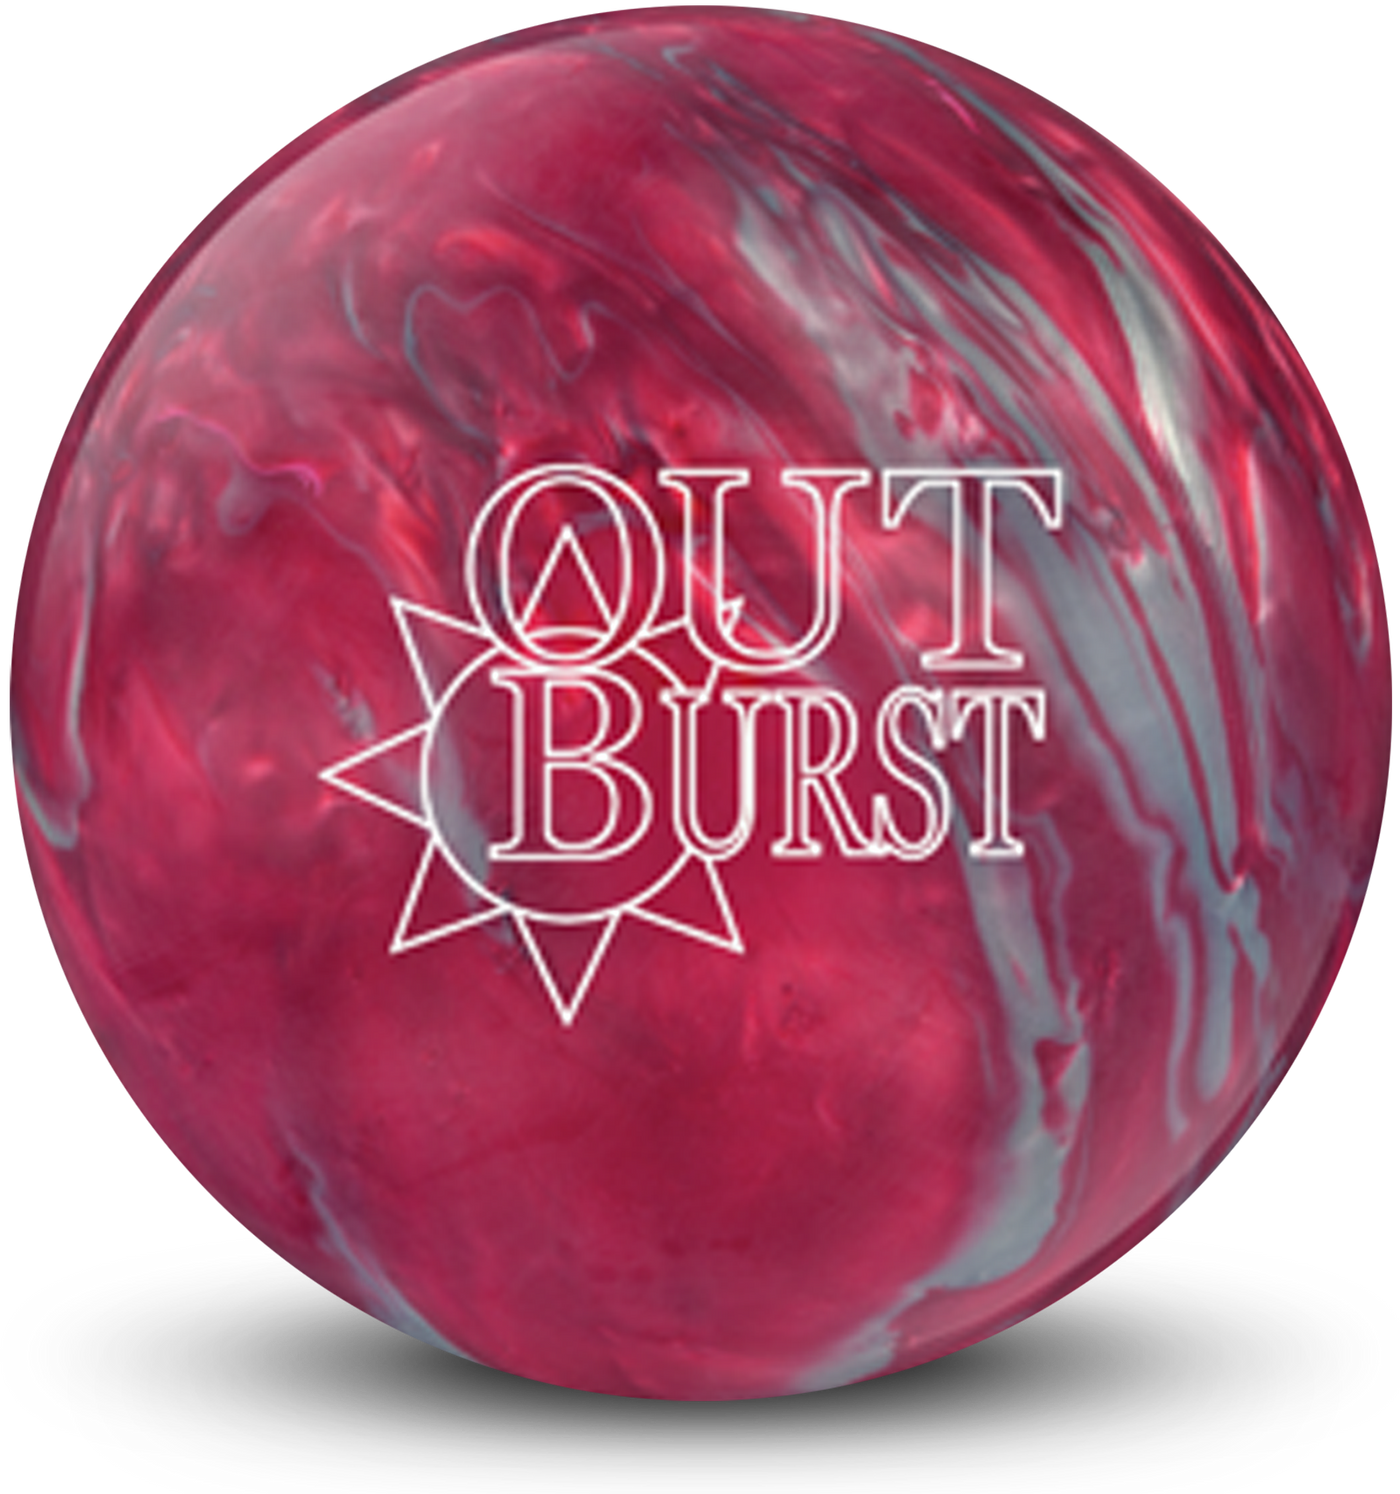 Outburst Bowling Ball